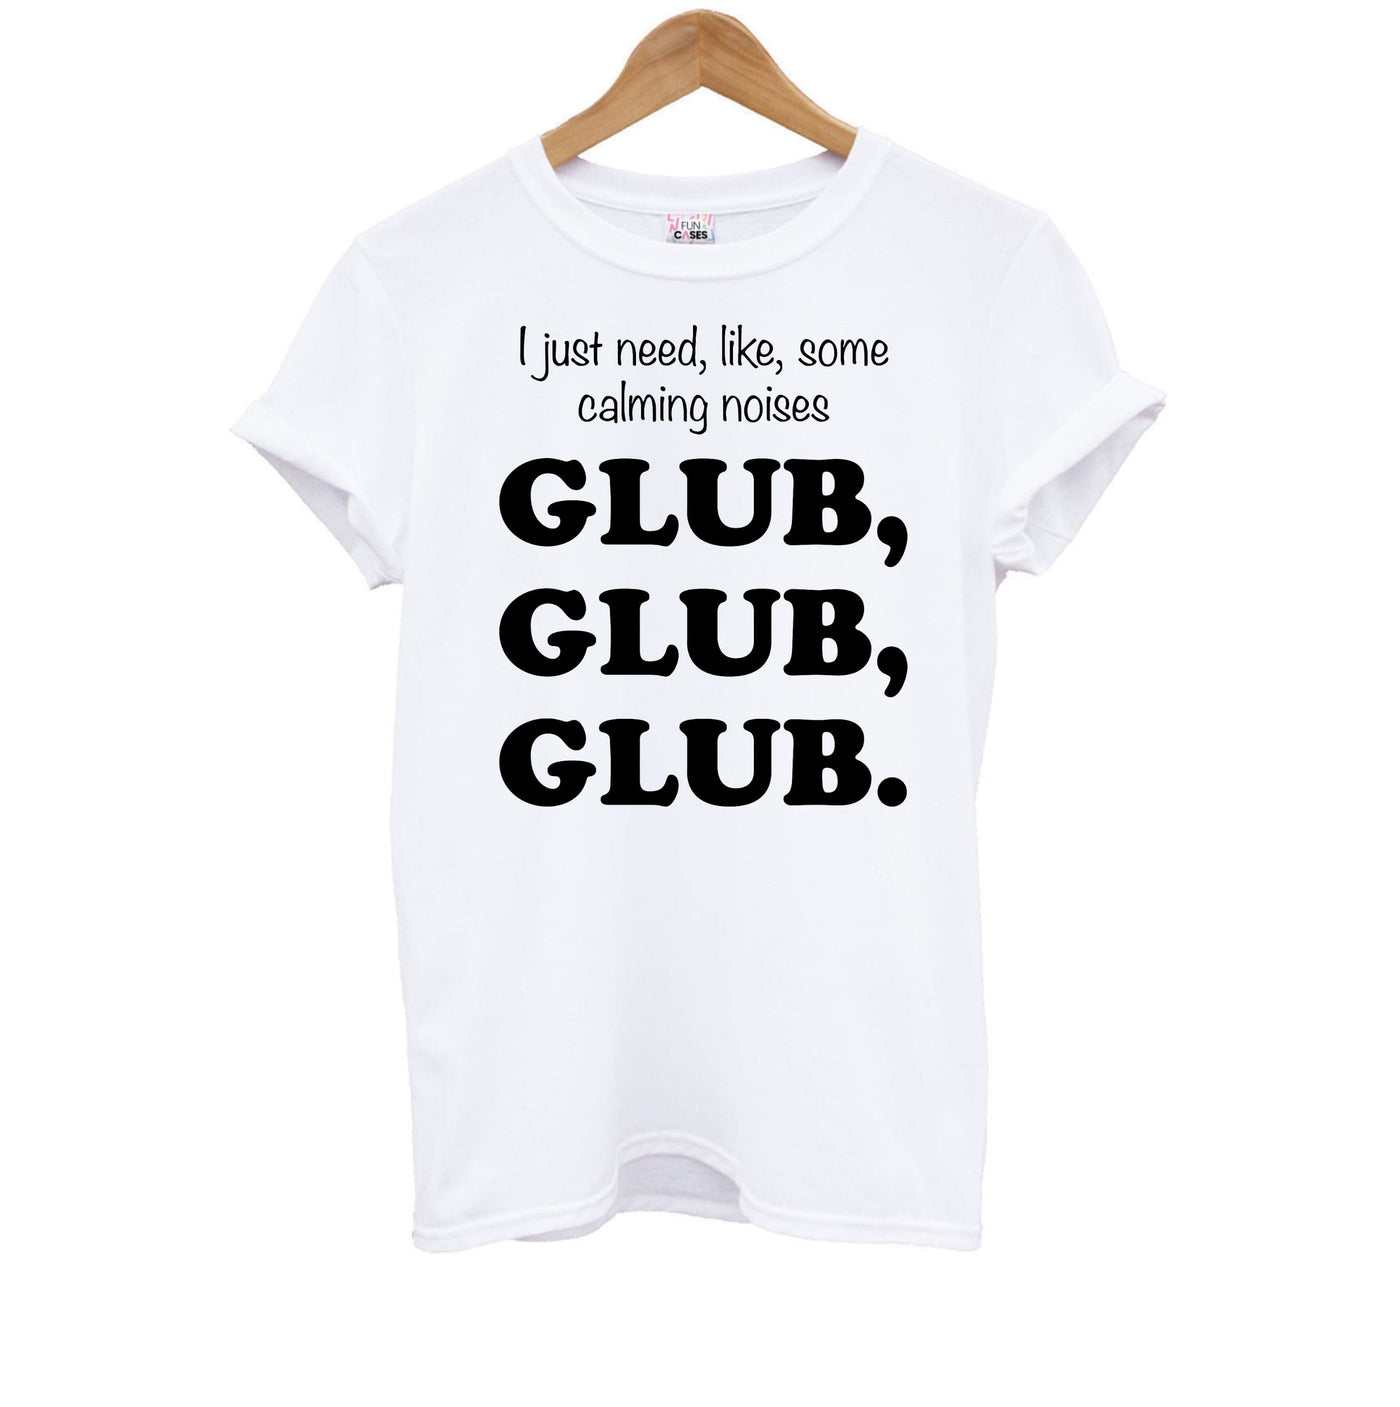 Glub Glub Glub - Brooklyn Nine-Nine Kids T-Shirt